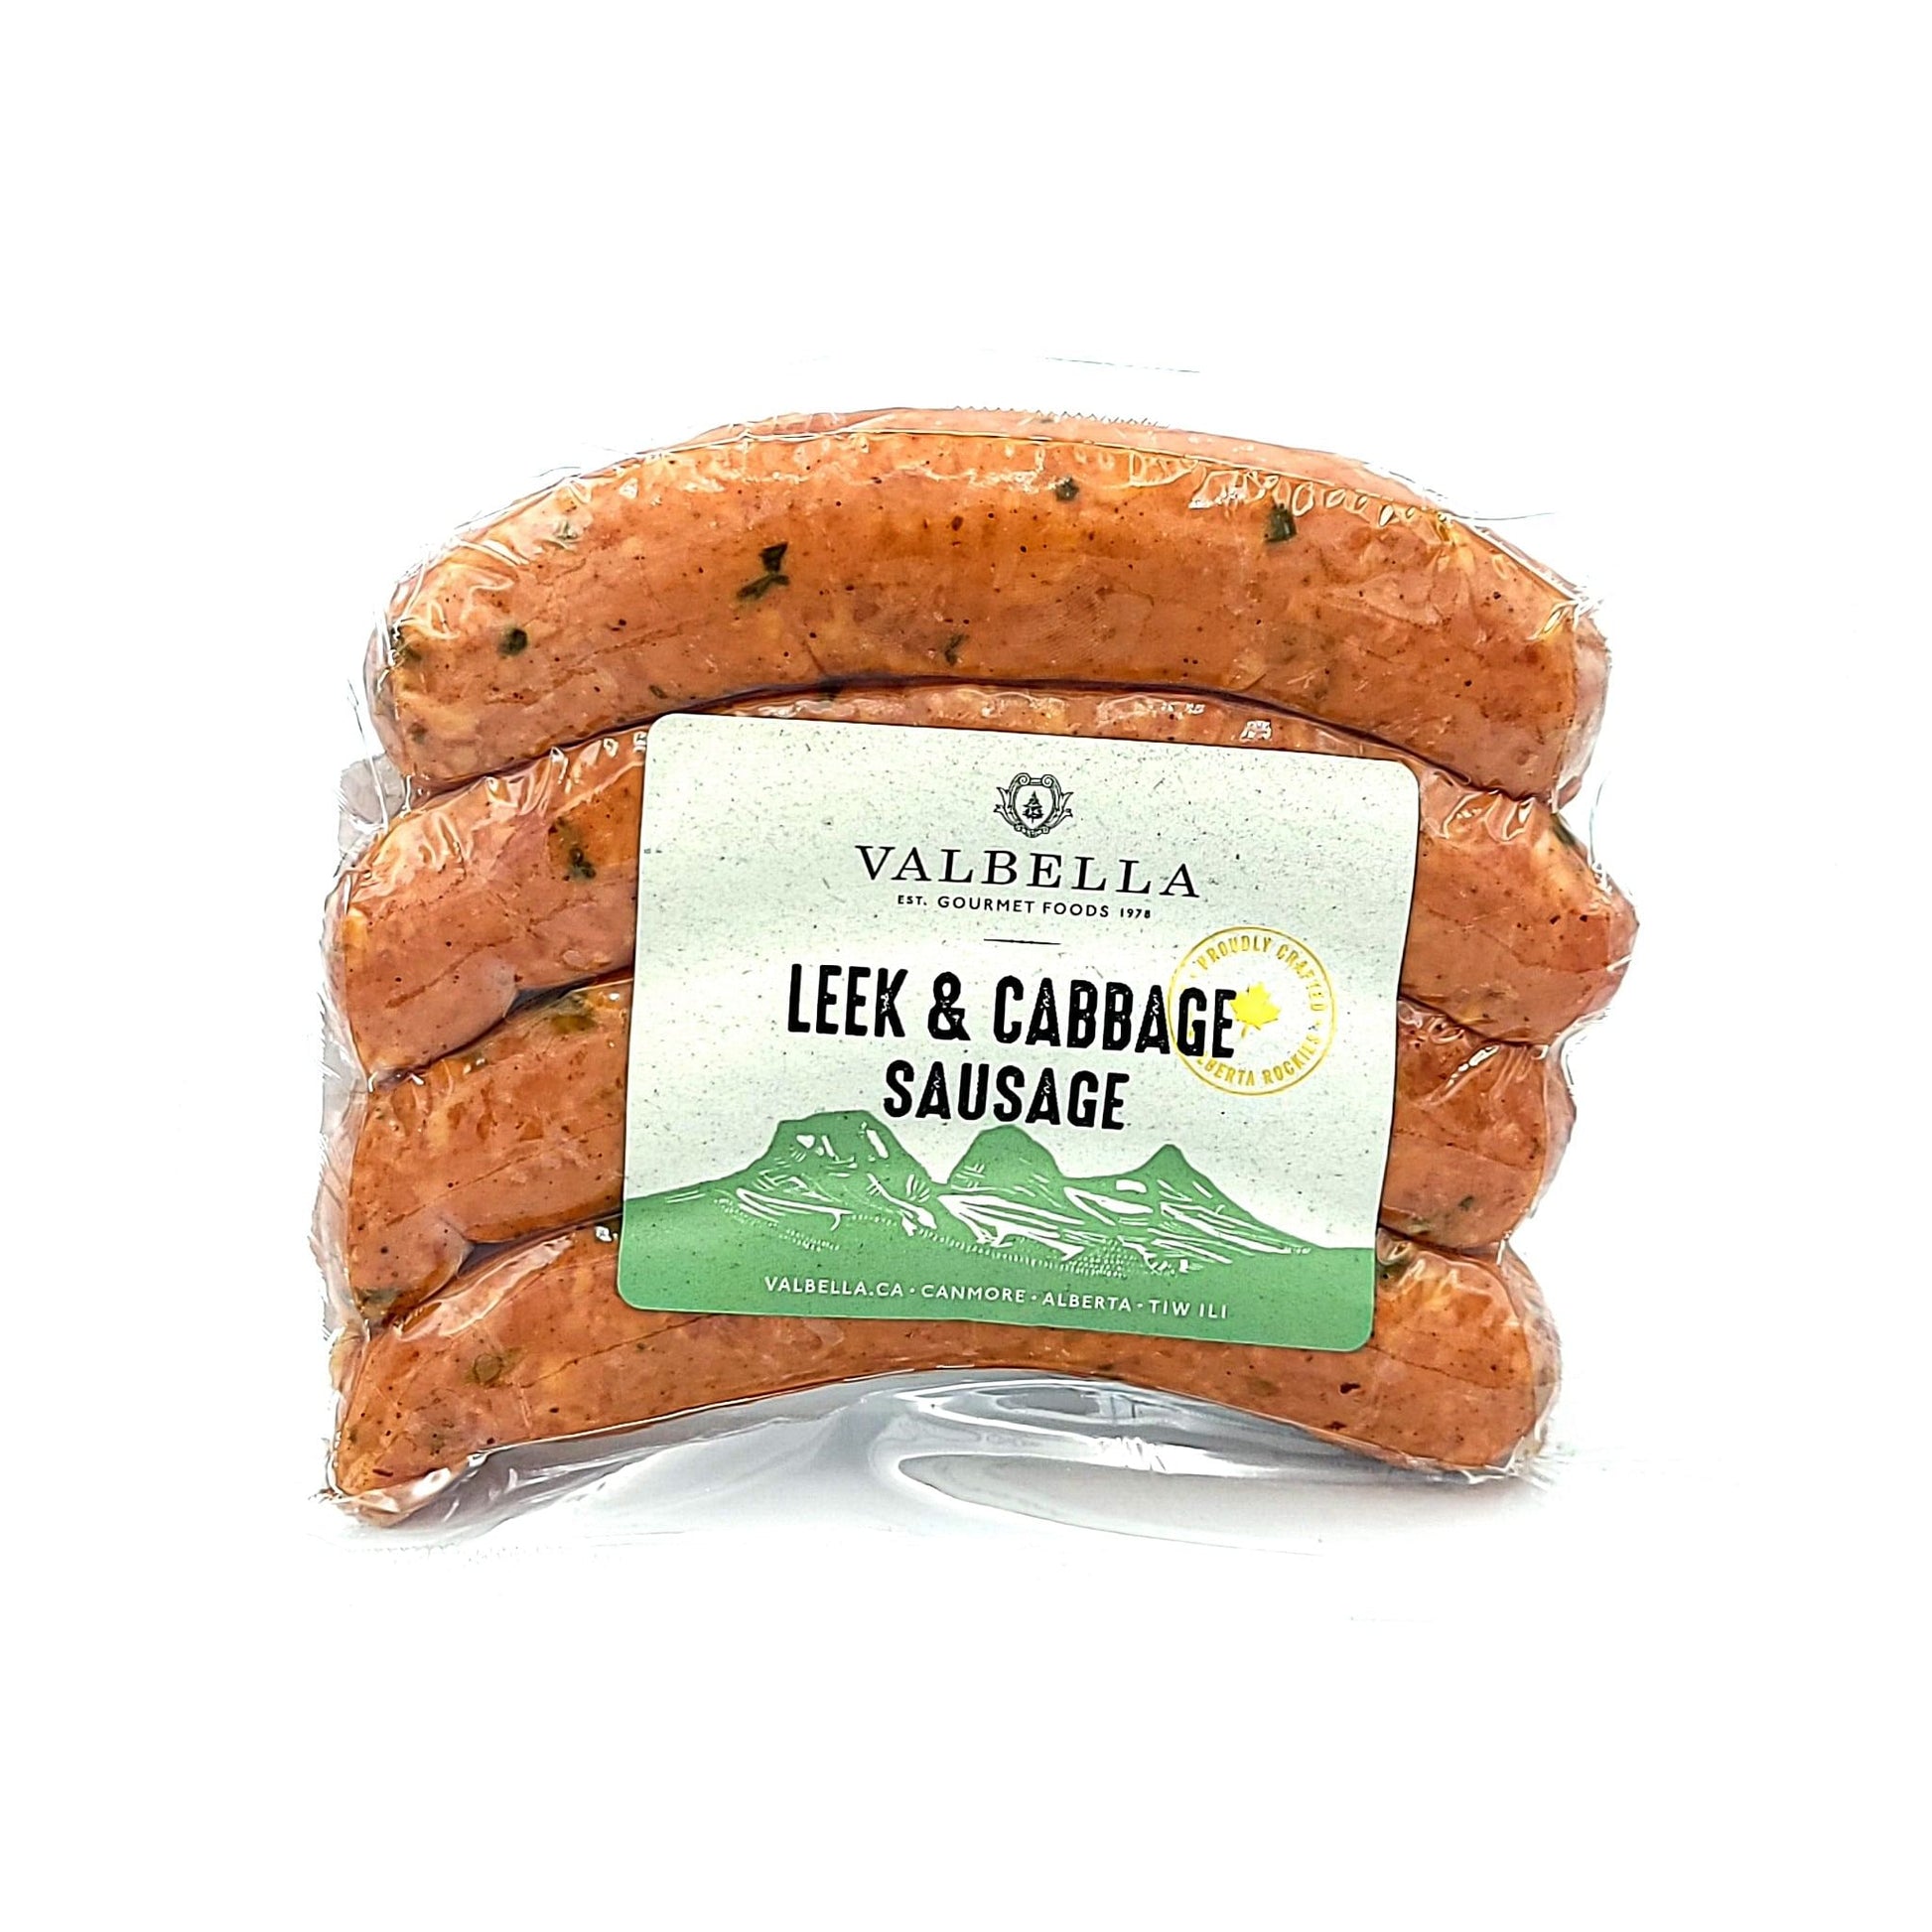 Leek & Cabbage Sausage - Valbella Gourmet Foods